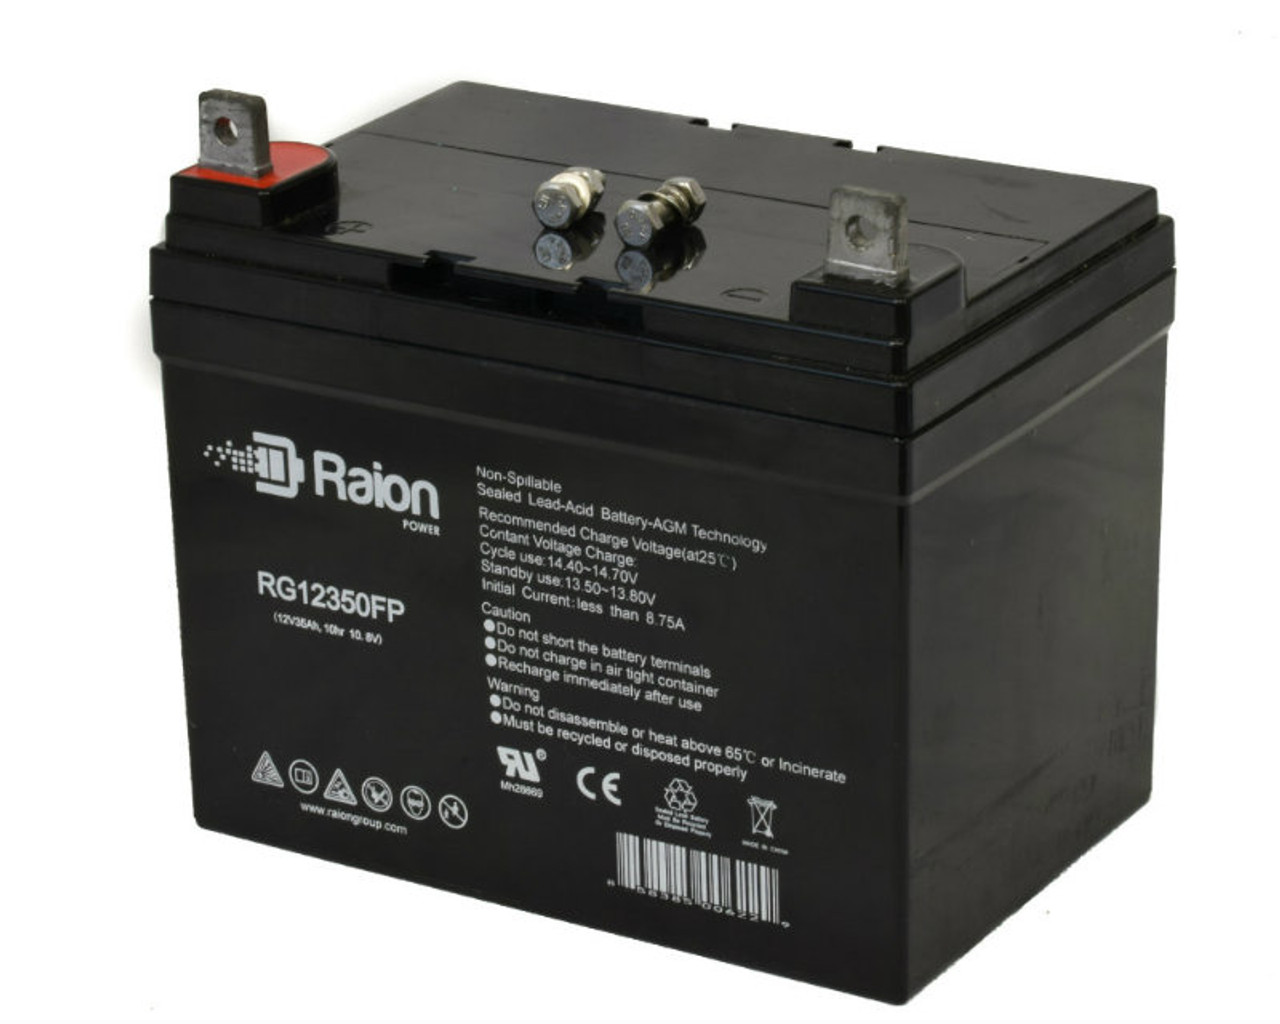 Raion Power Replacement 12V 35Ah Battery for Husqvarna LT120 - 1 Pack